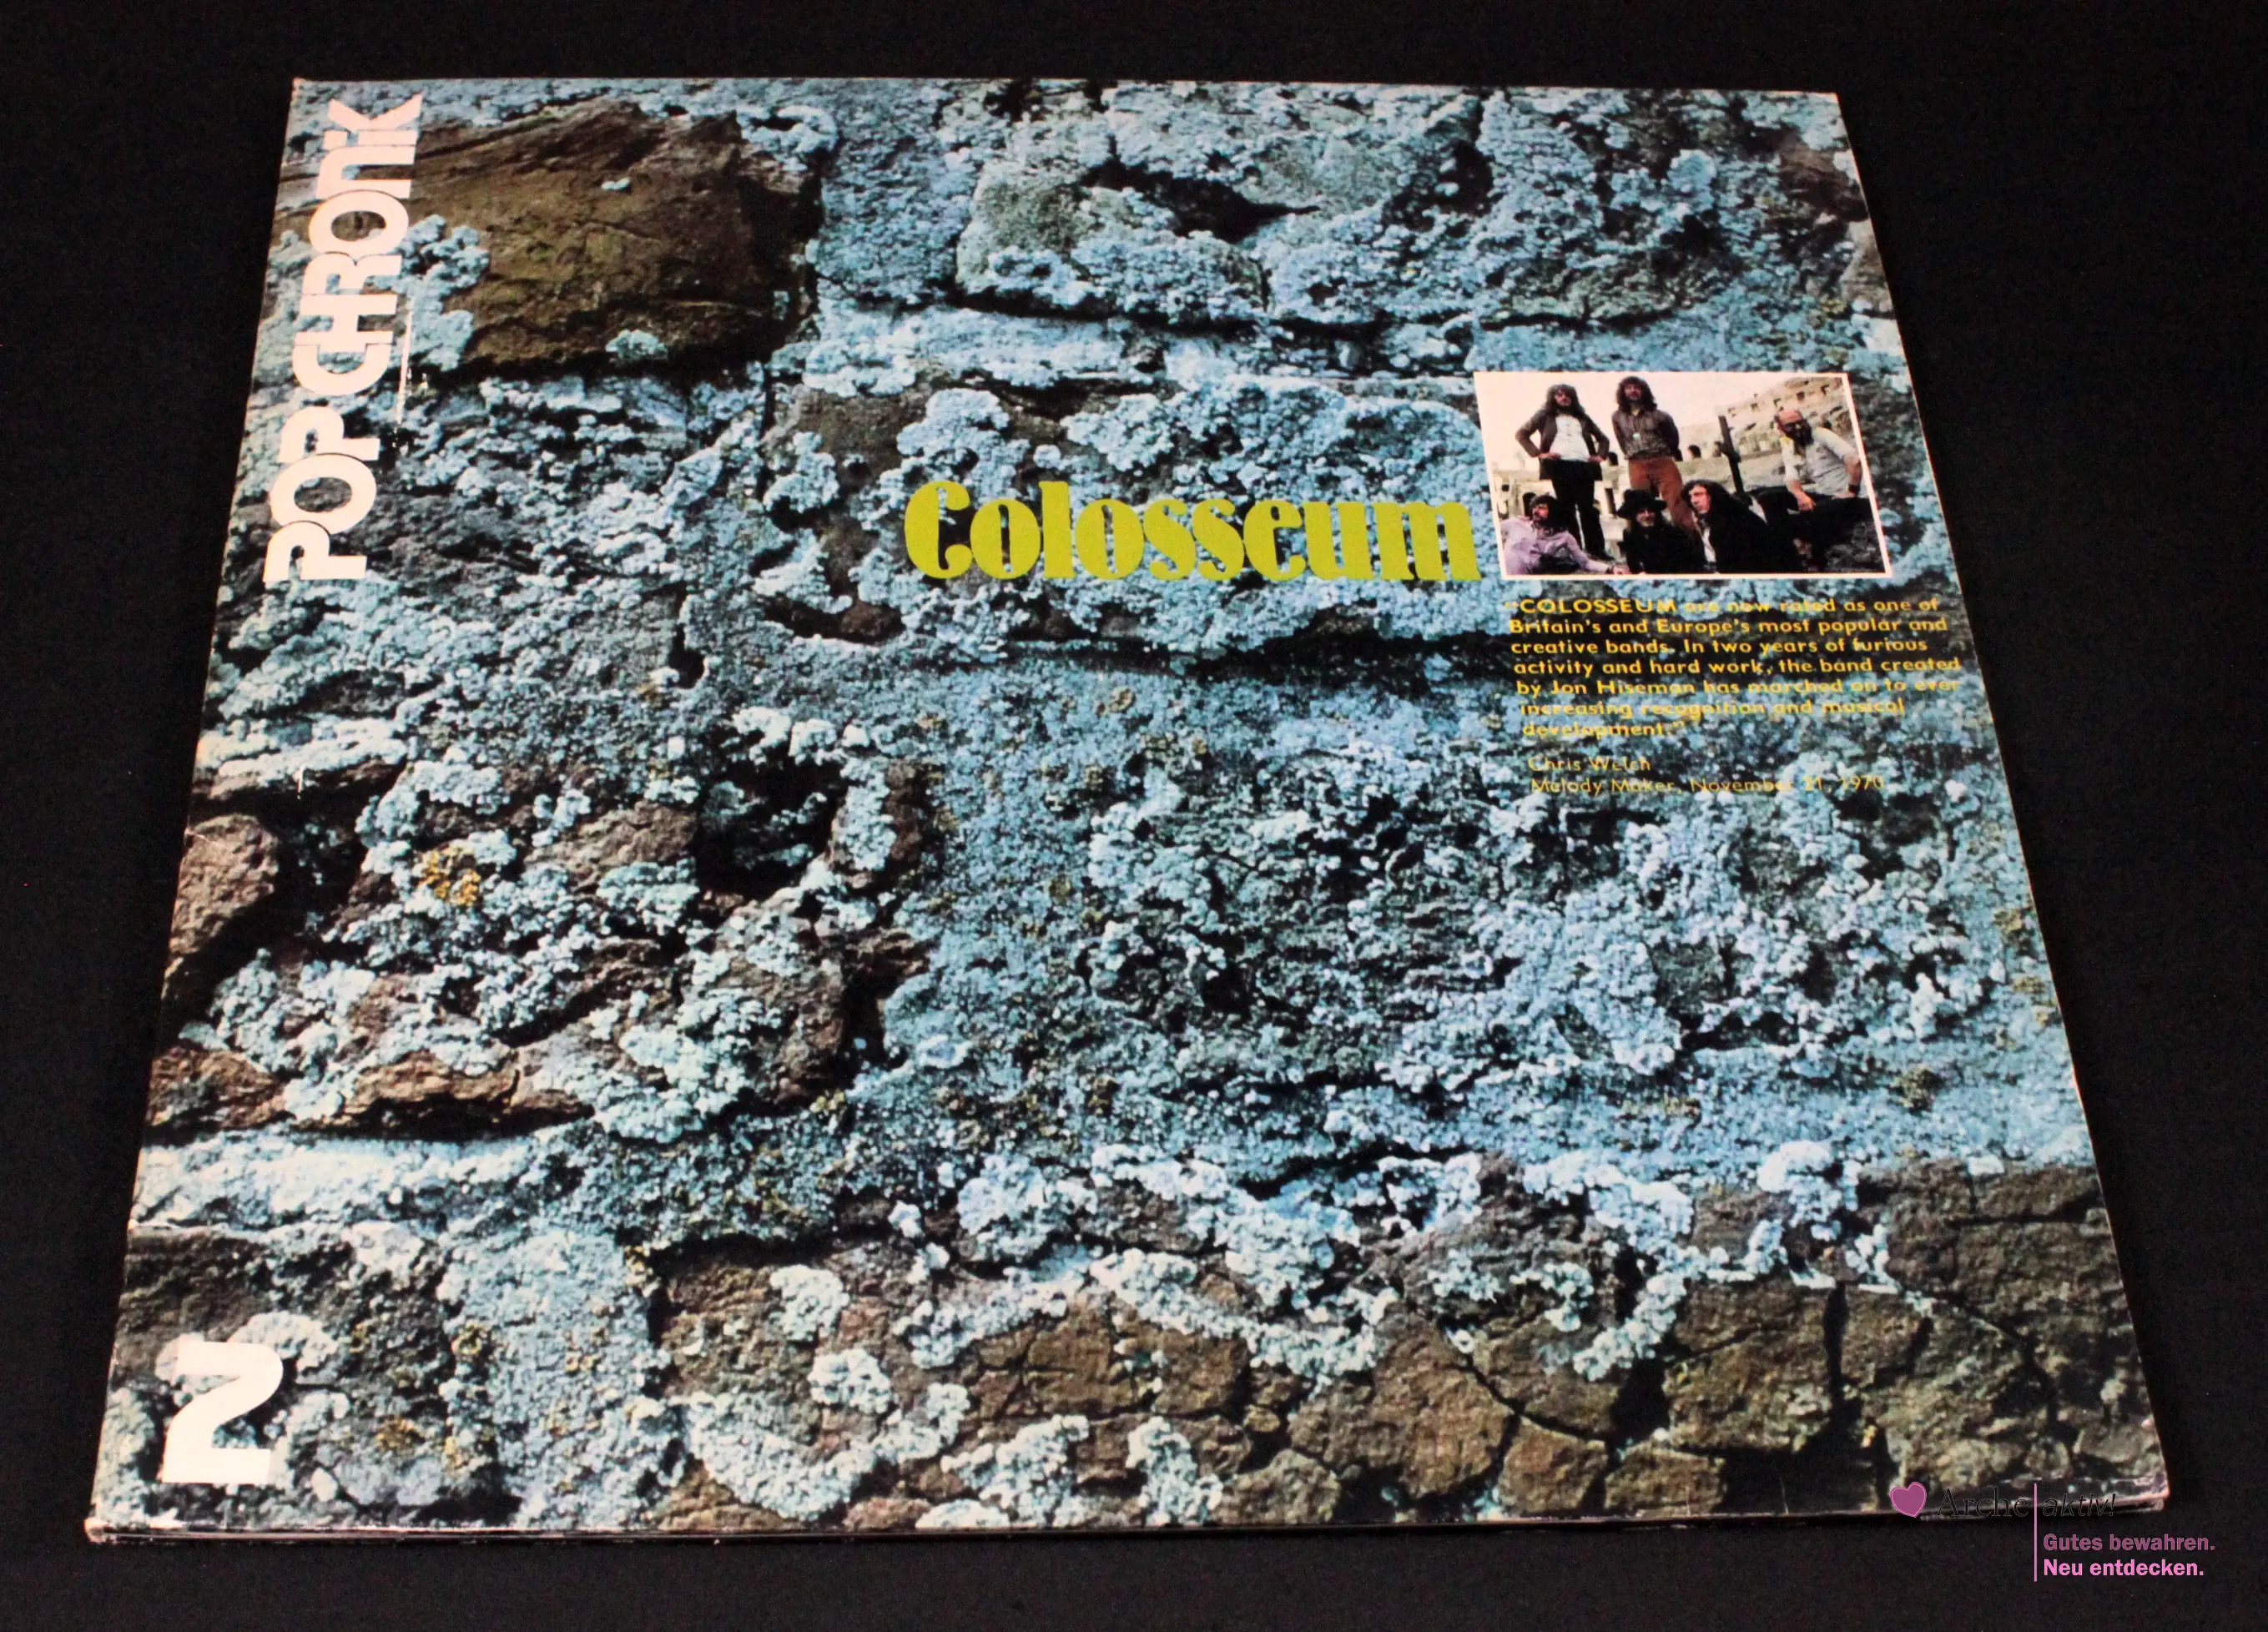 Colosseum - Pop Chronik (Vinyl) Doppel-LP, gebraucht